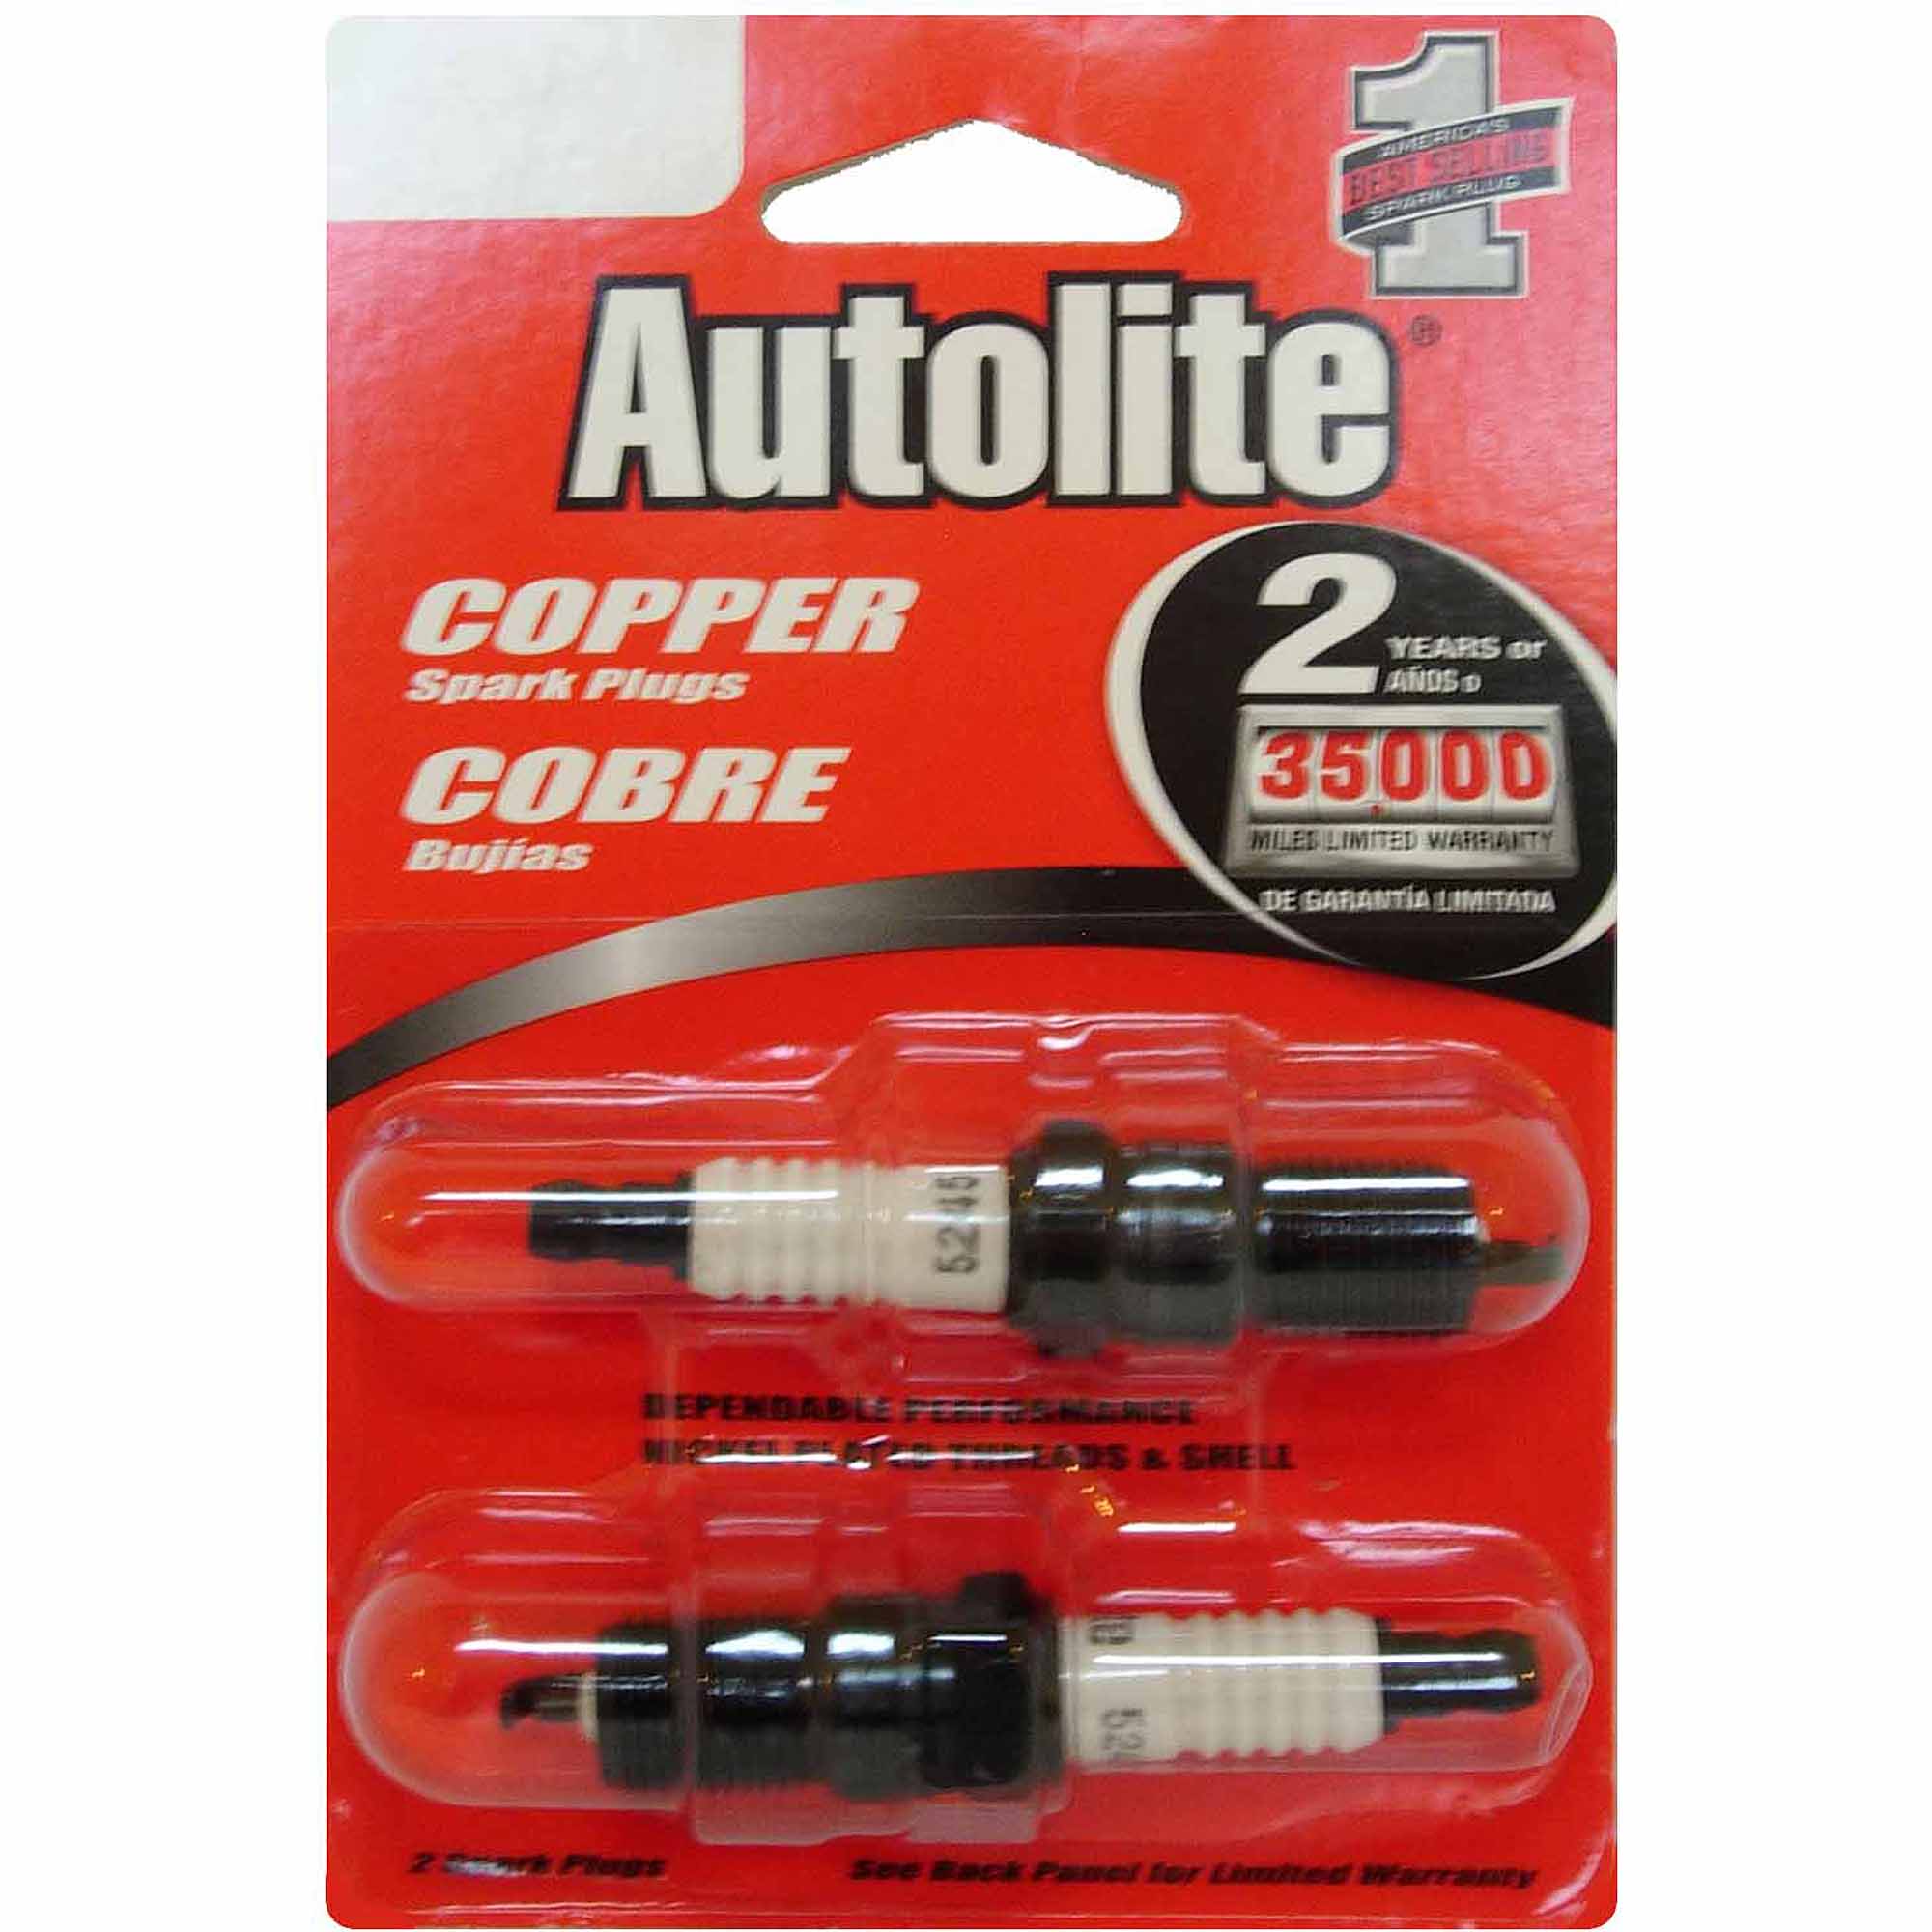 Autolite Copper Spark Plug, A25DP2 - image 1 of 2